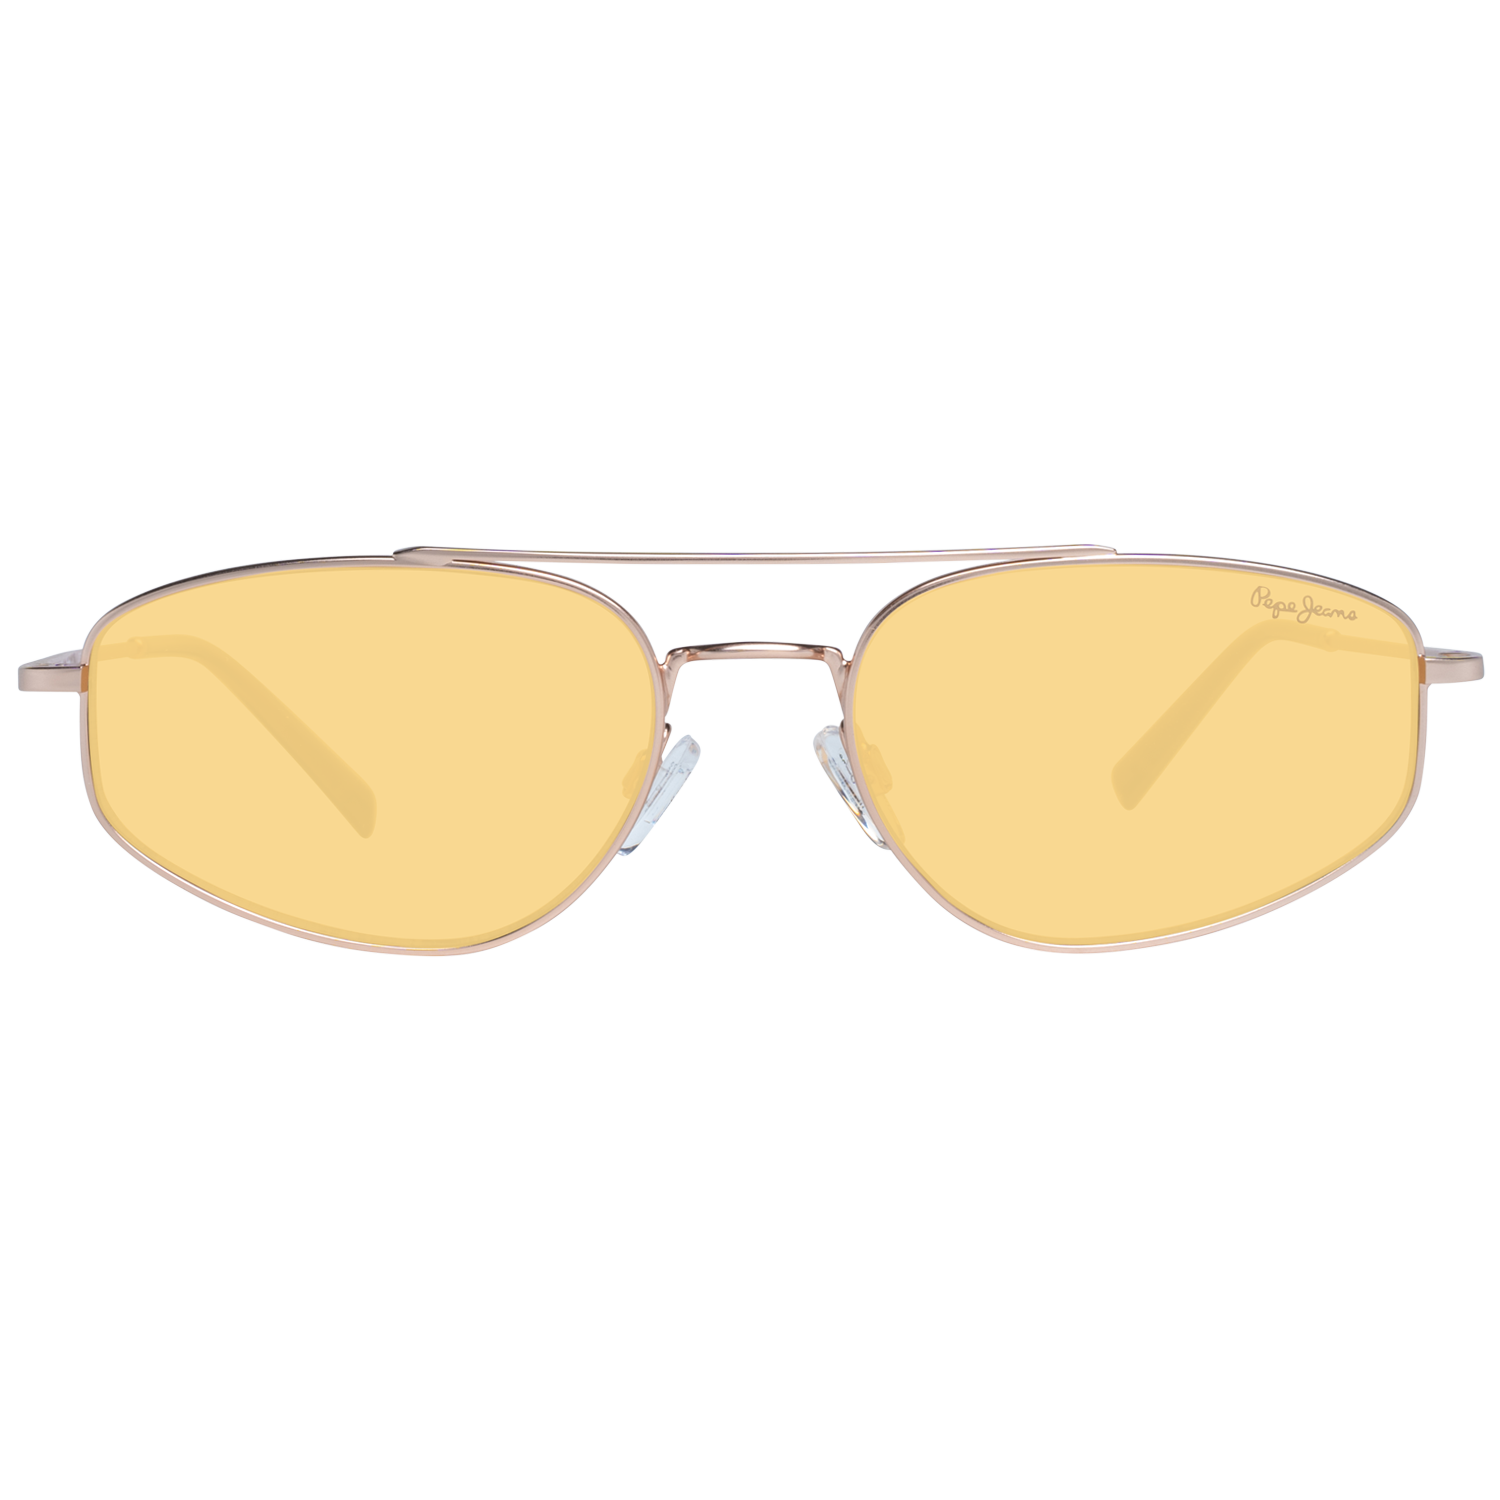 Pepe Jeans Sunglasses Pepe Jeans Sunglasses PJ5178 C5 56 Eyeglasses Eyewear UK USA Australia 